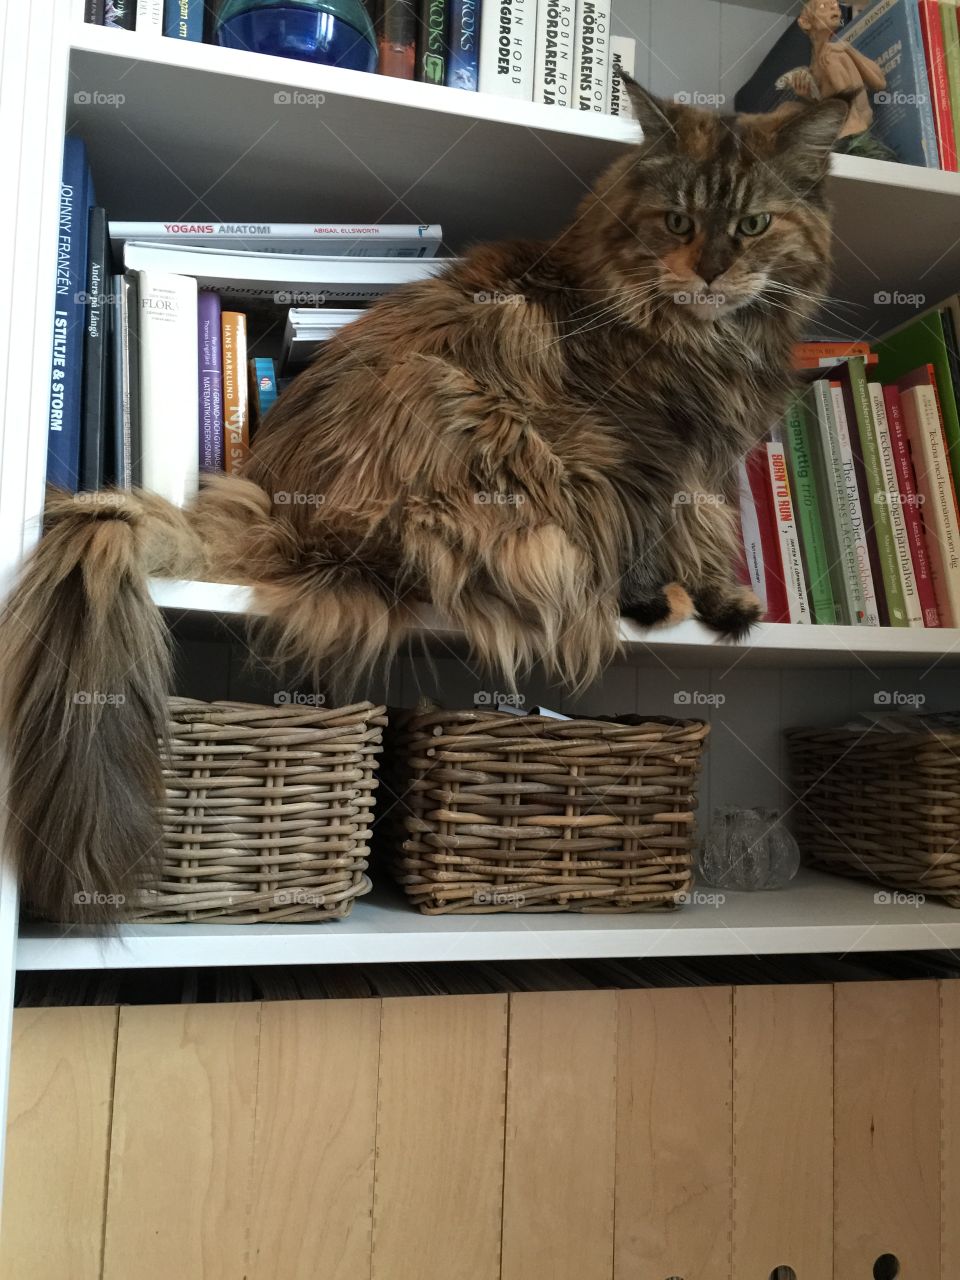 Cat in bookshelf